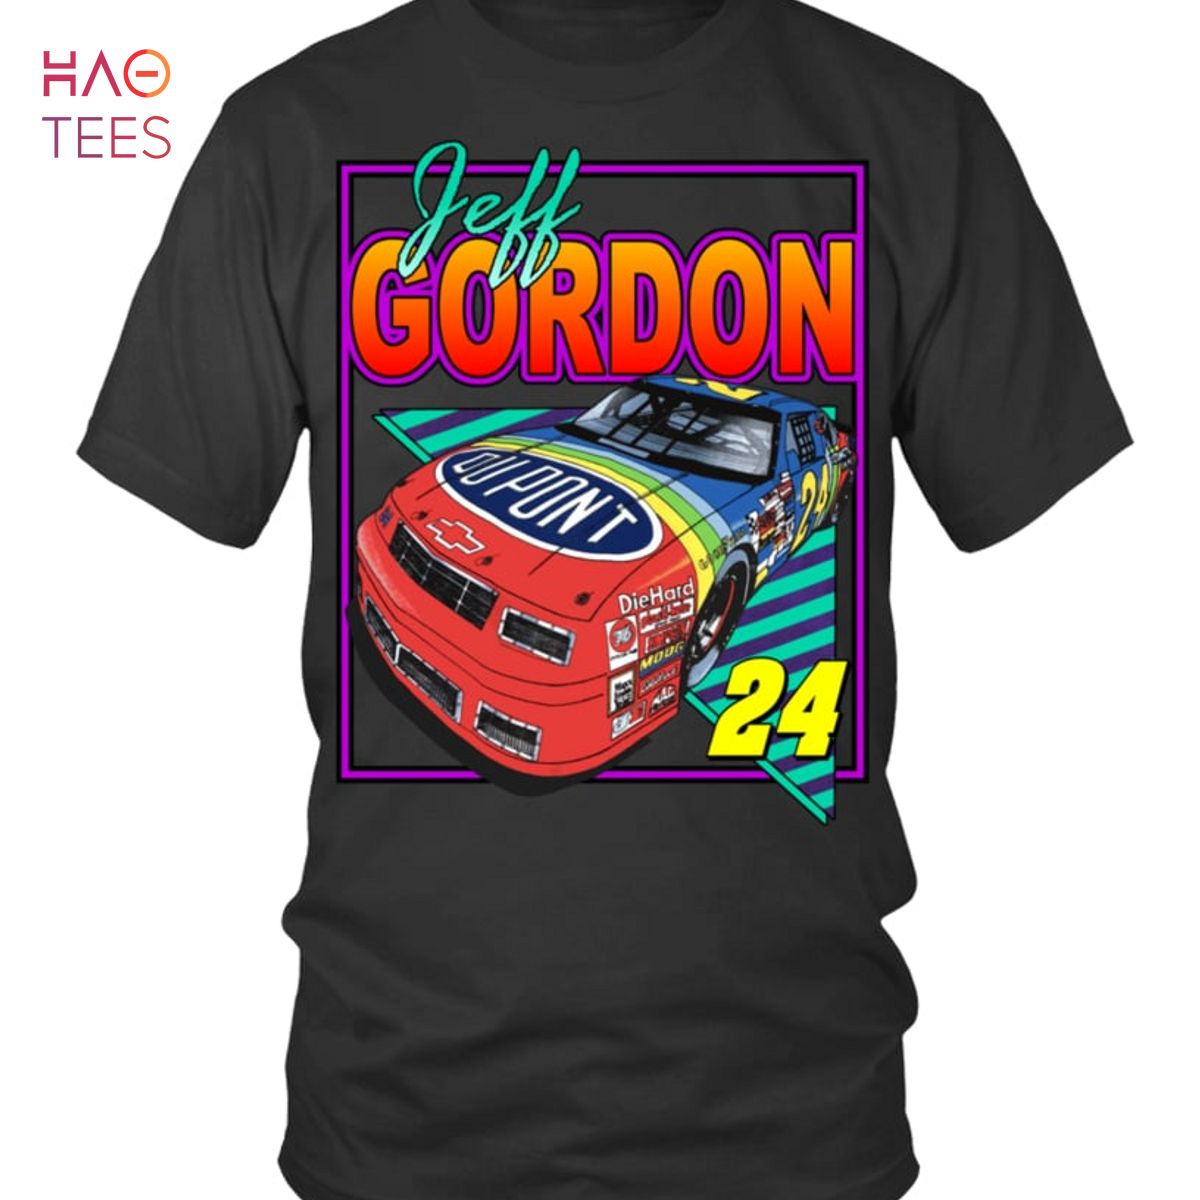 Jeff Gordon American Race Car Driver Shirt Limited Edition